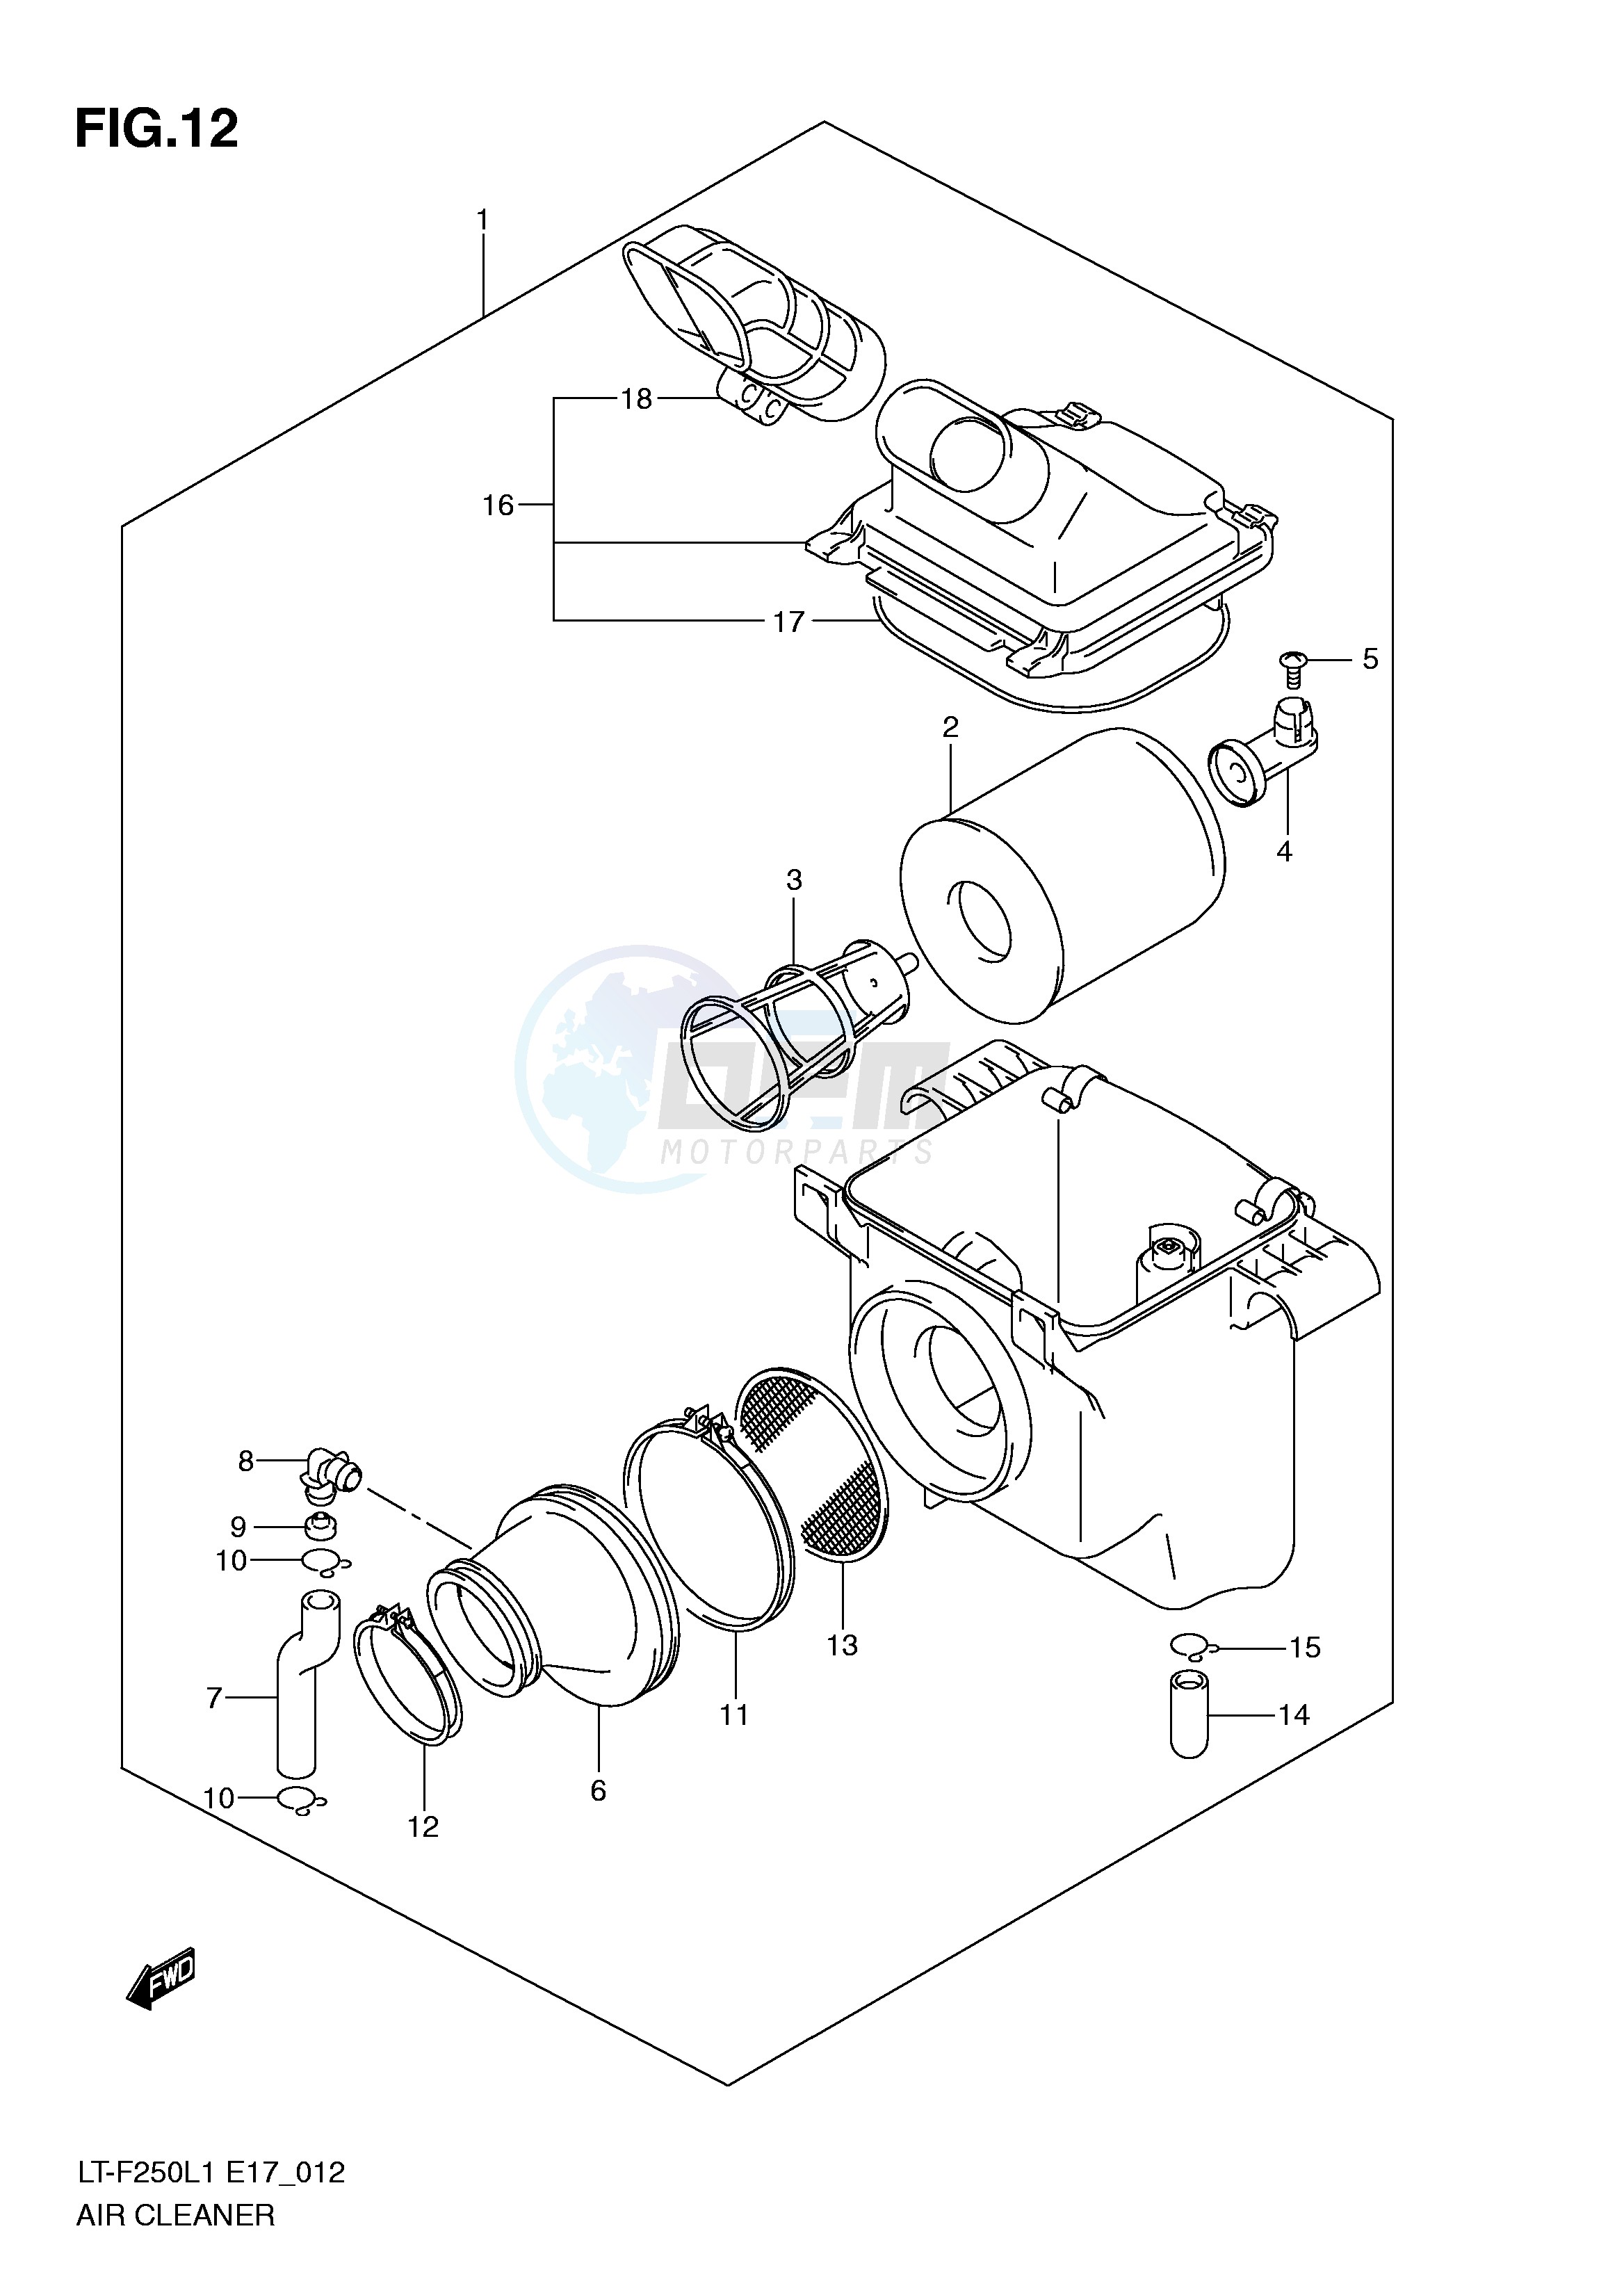 AIR CLEANER (LT-F250L1 E17) blueprint